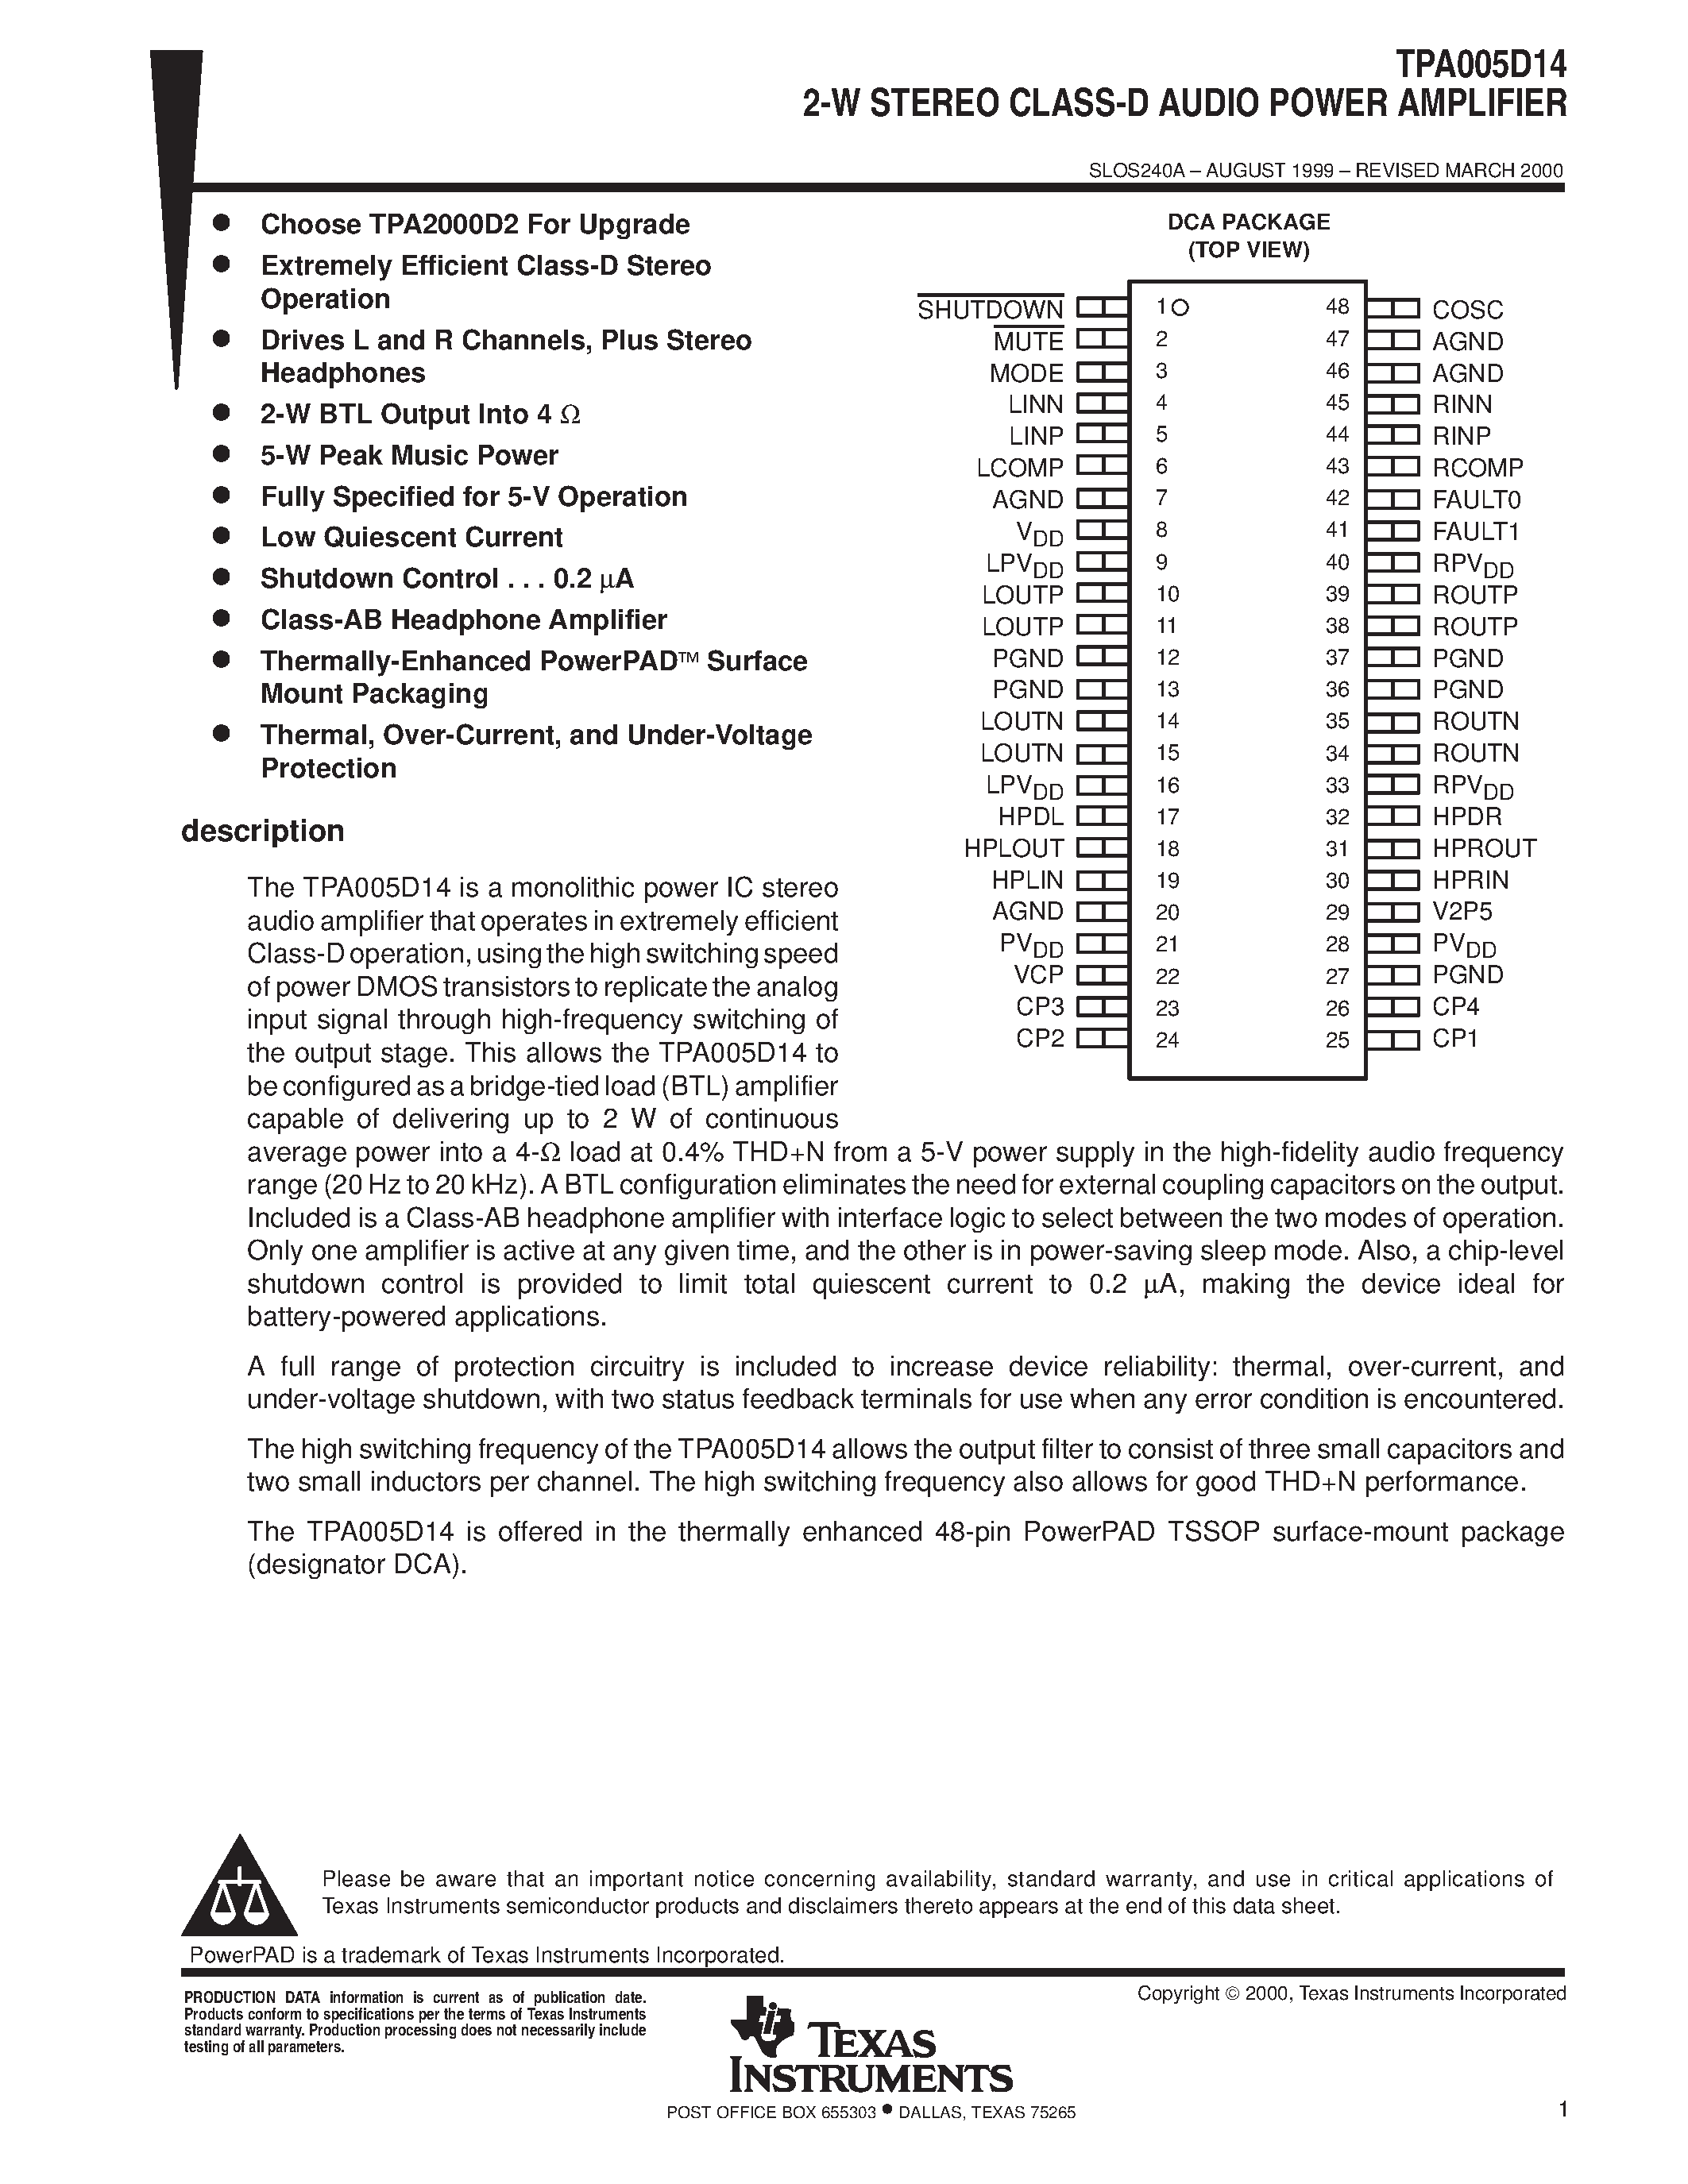 Datasheet TPA005D14 - 2-W STEREO CLASS-D AUDIO POWER AMPLIFIER page 1